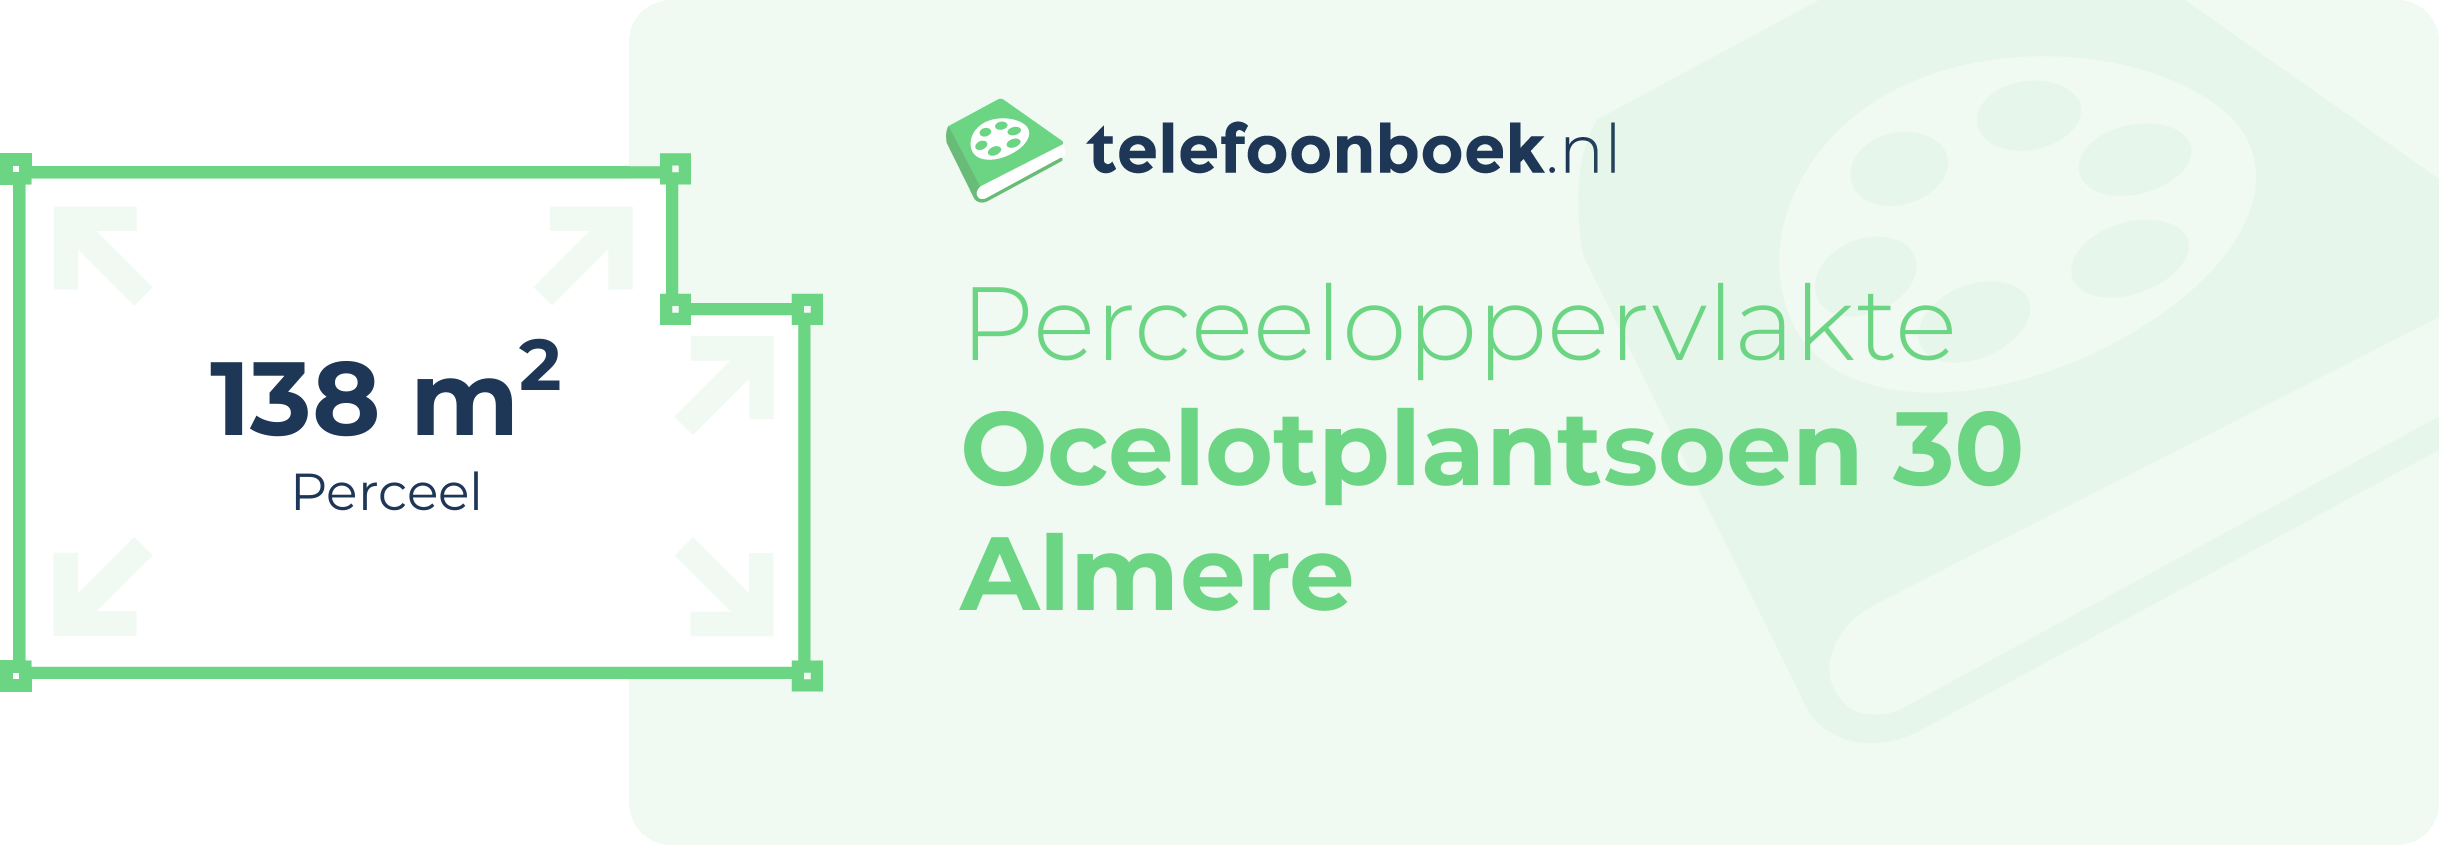 Perceeloppervlakte Ocelotplantsoen 30 Almere